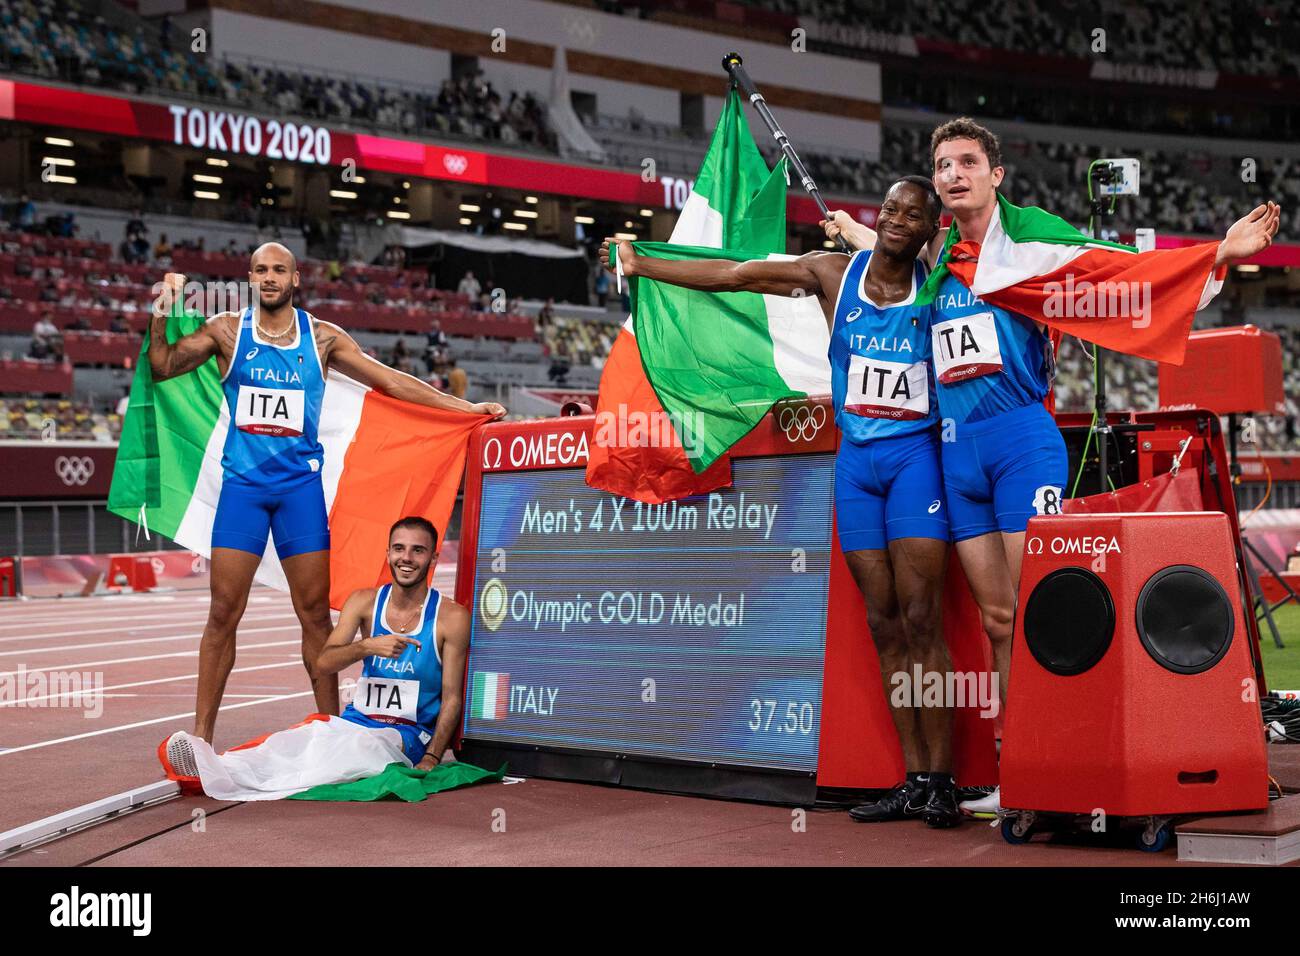 The Italian 4x100m mens team win Olympic Gold at the Tokyo 2020 Olympics. Stock Photo